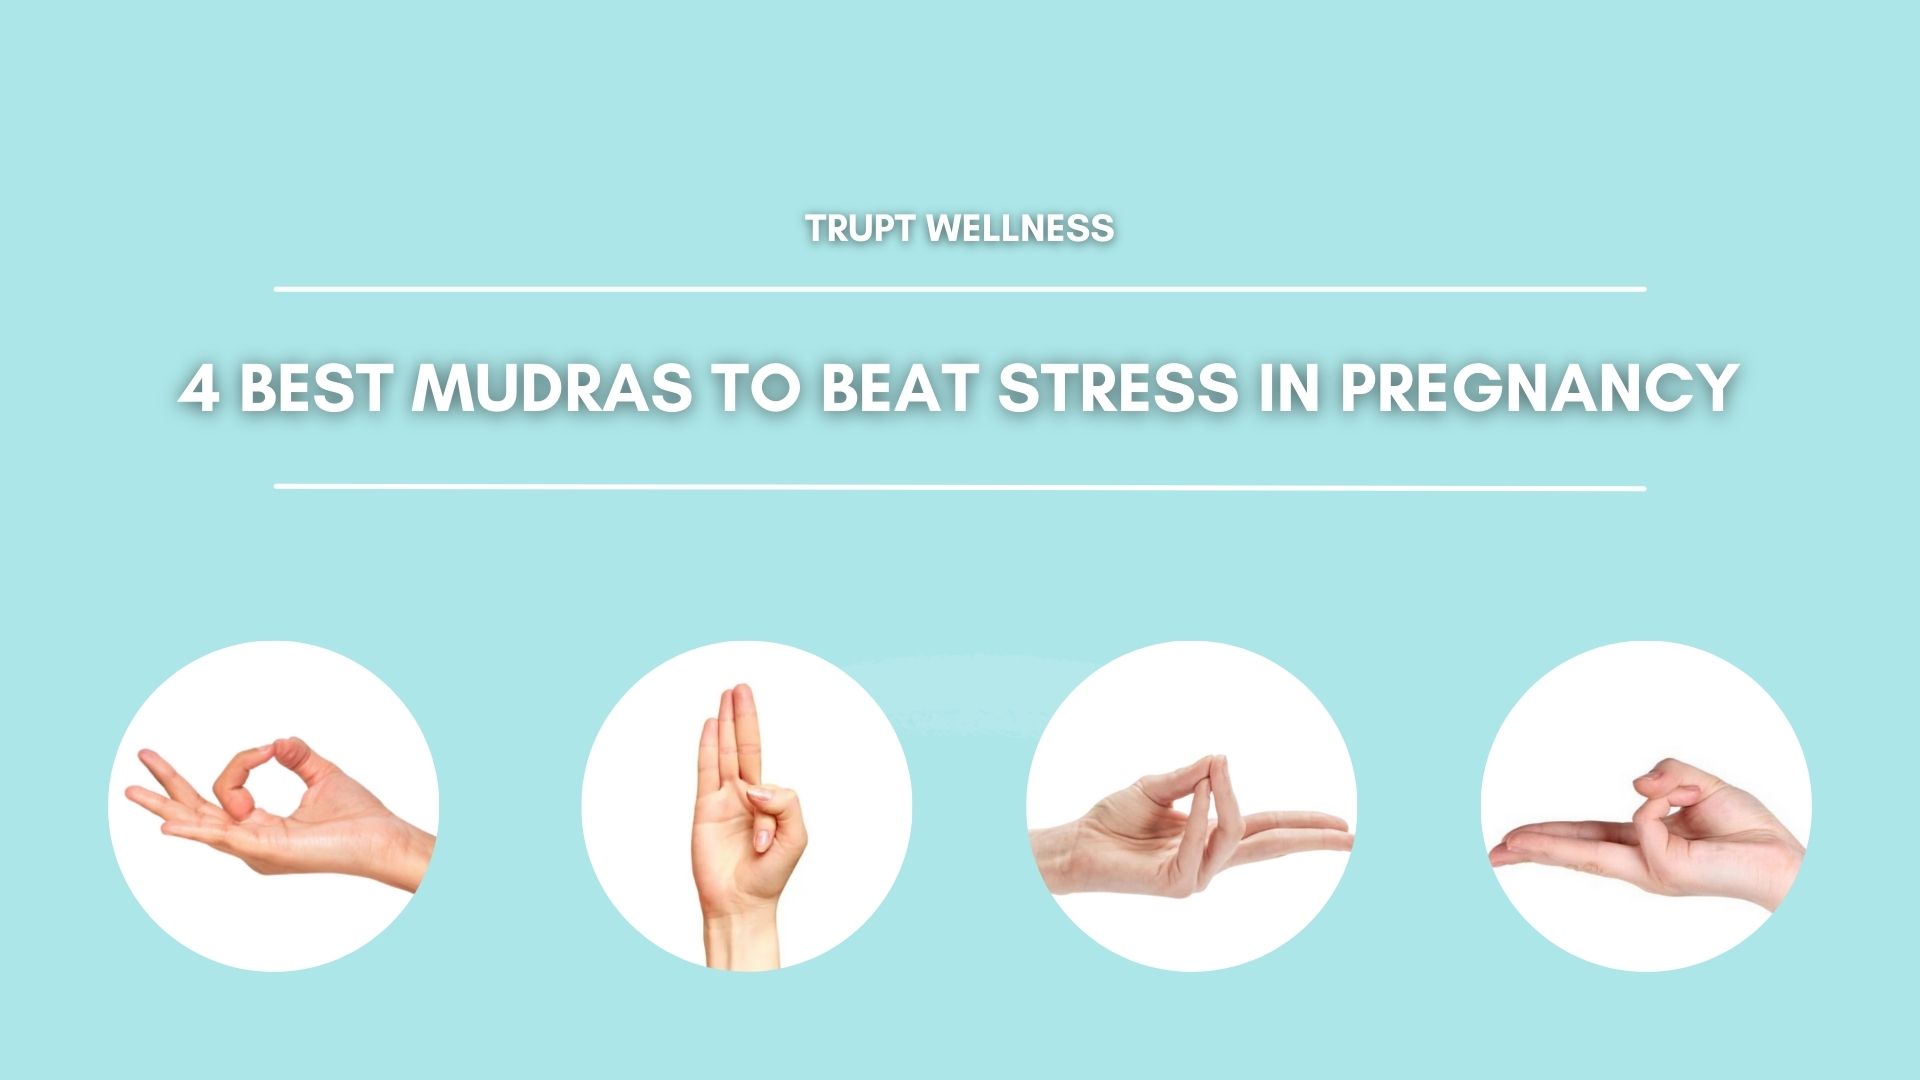 Udana, mudra, hands, hindu, yoga, gesture, hand icon - Download